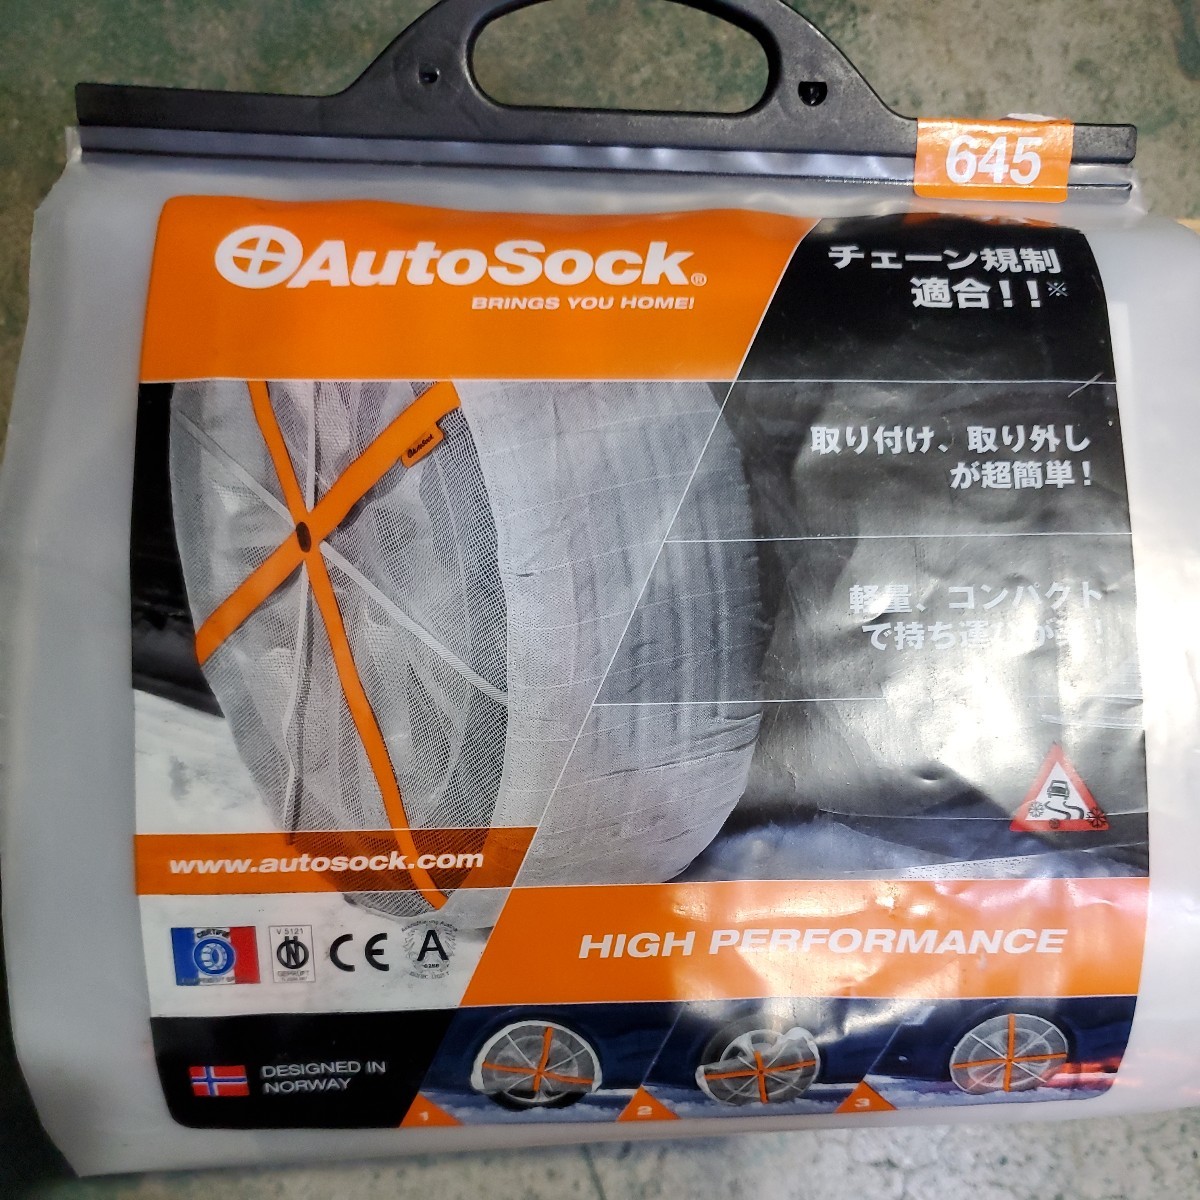  Auto Sock sAutoSock cloth made tire chain chain restriction conform 645